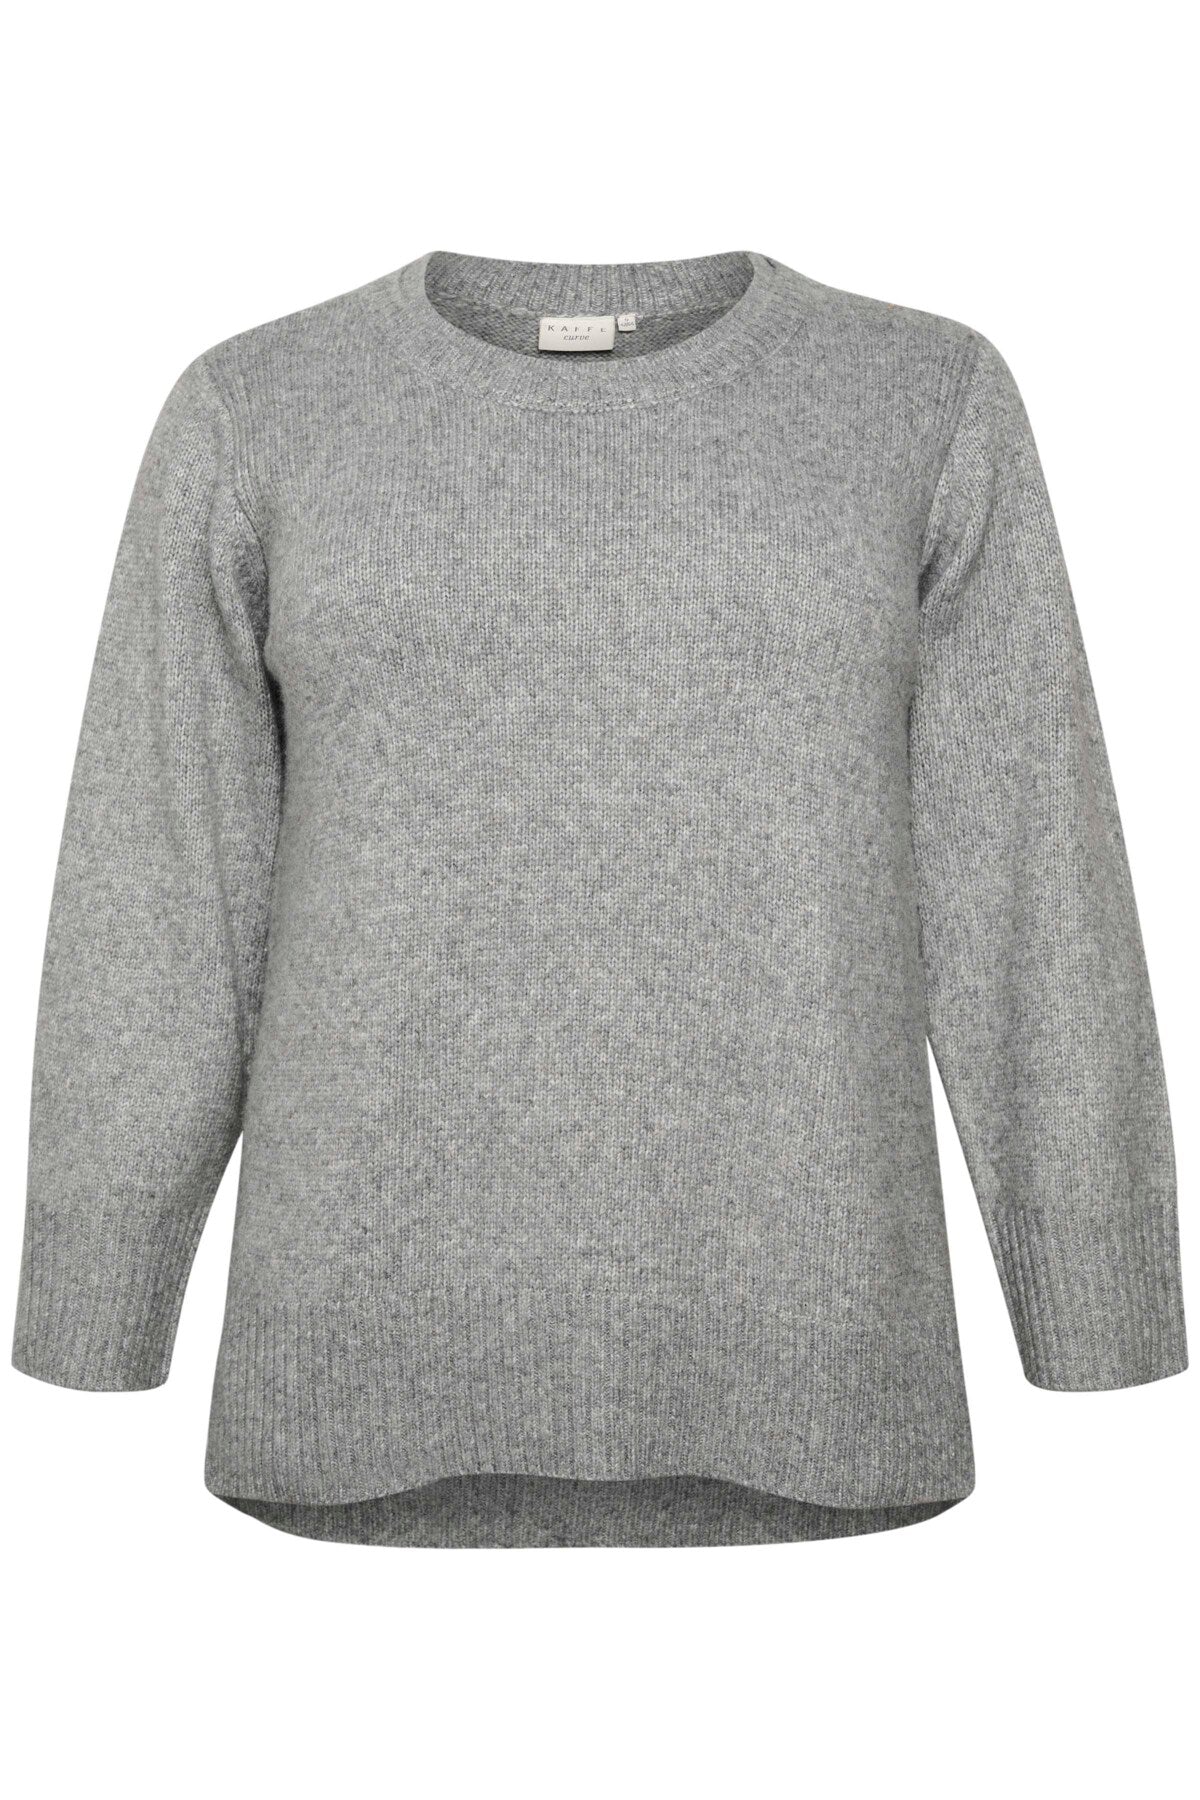 Olla Knit Sweater Tunic